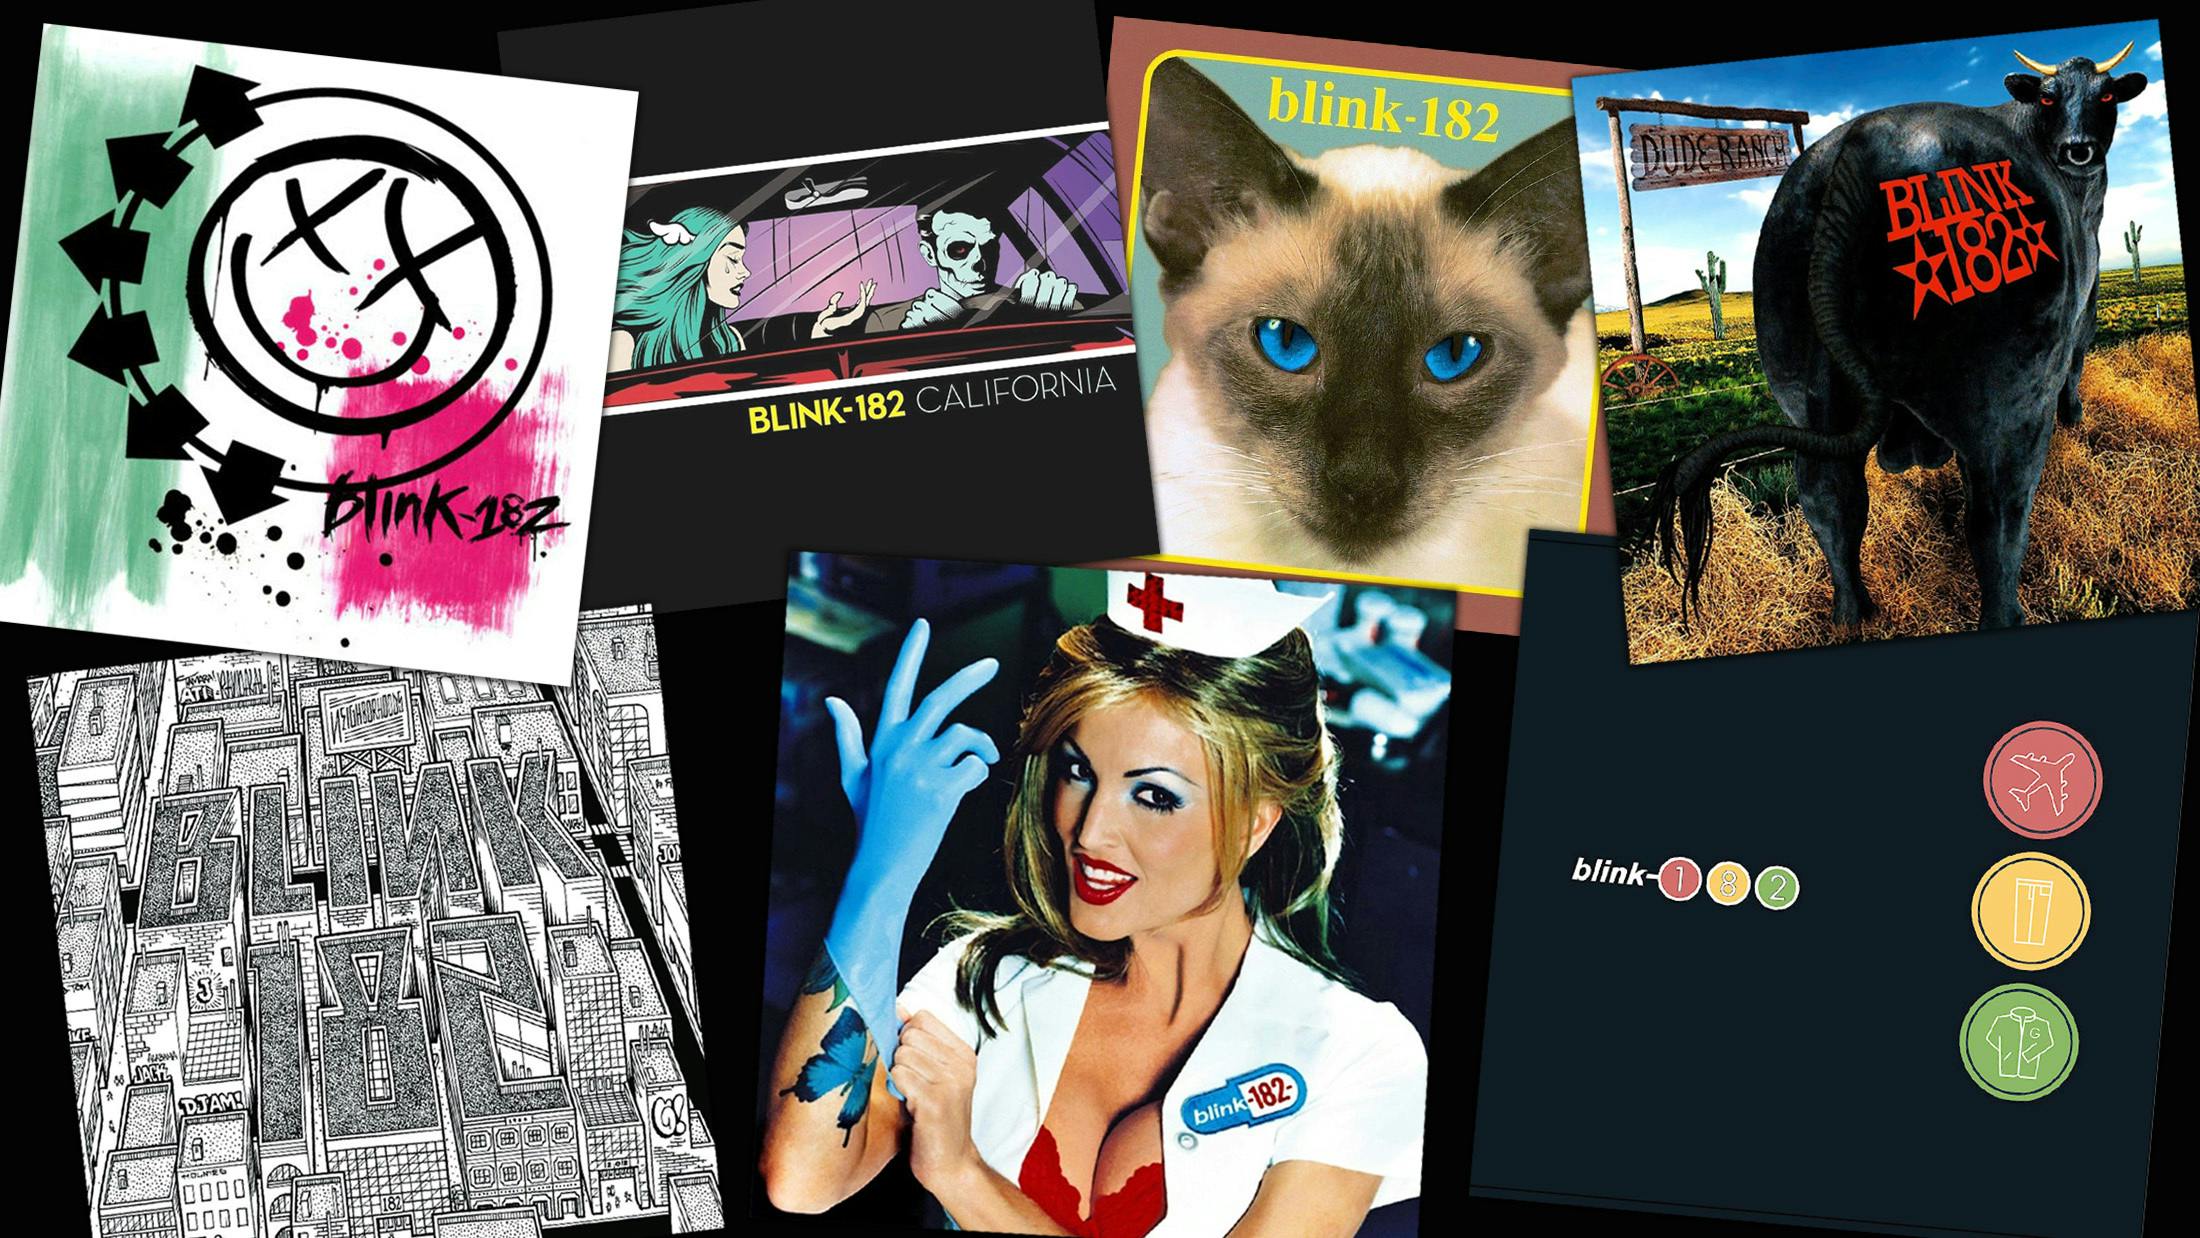 Blink 182 Albums : Stream The Entire blink-182 Album 'Neighborhoods